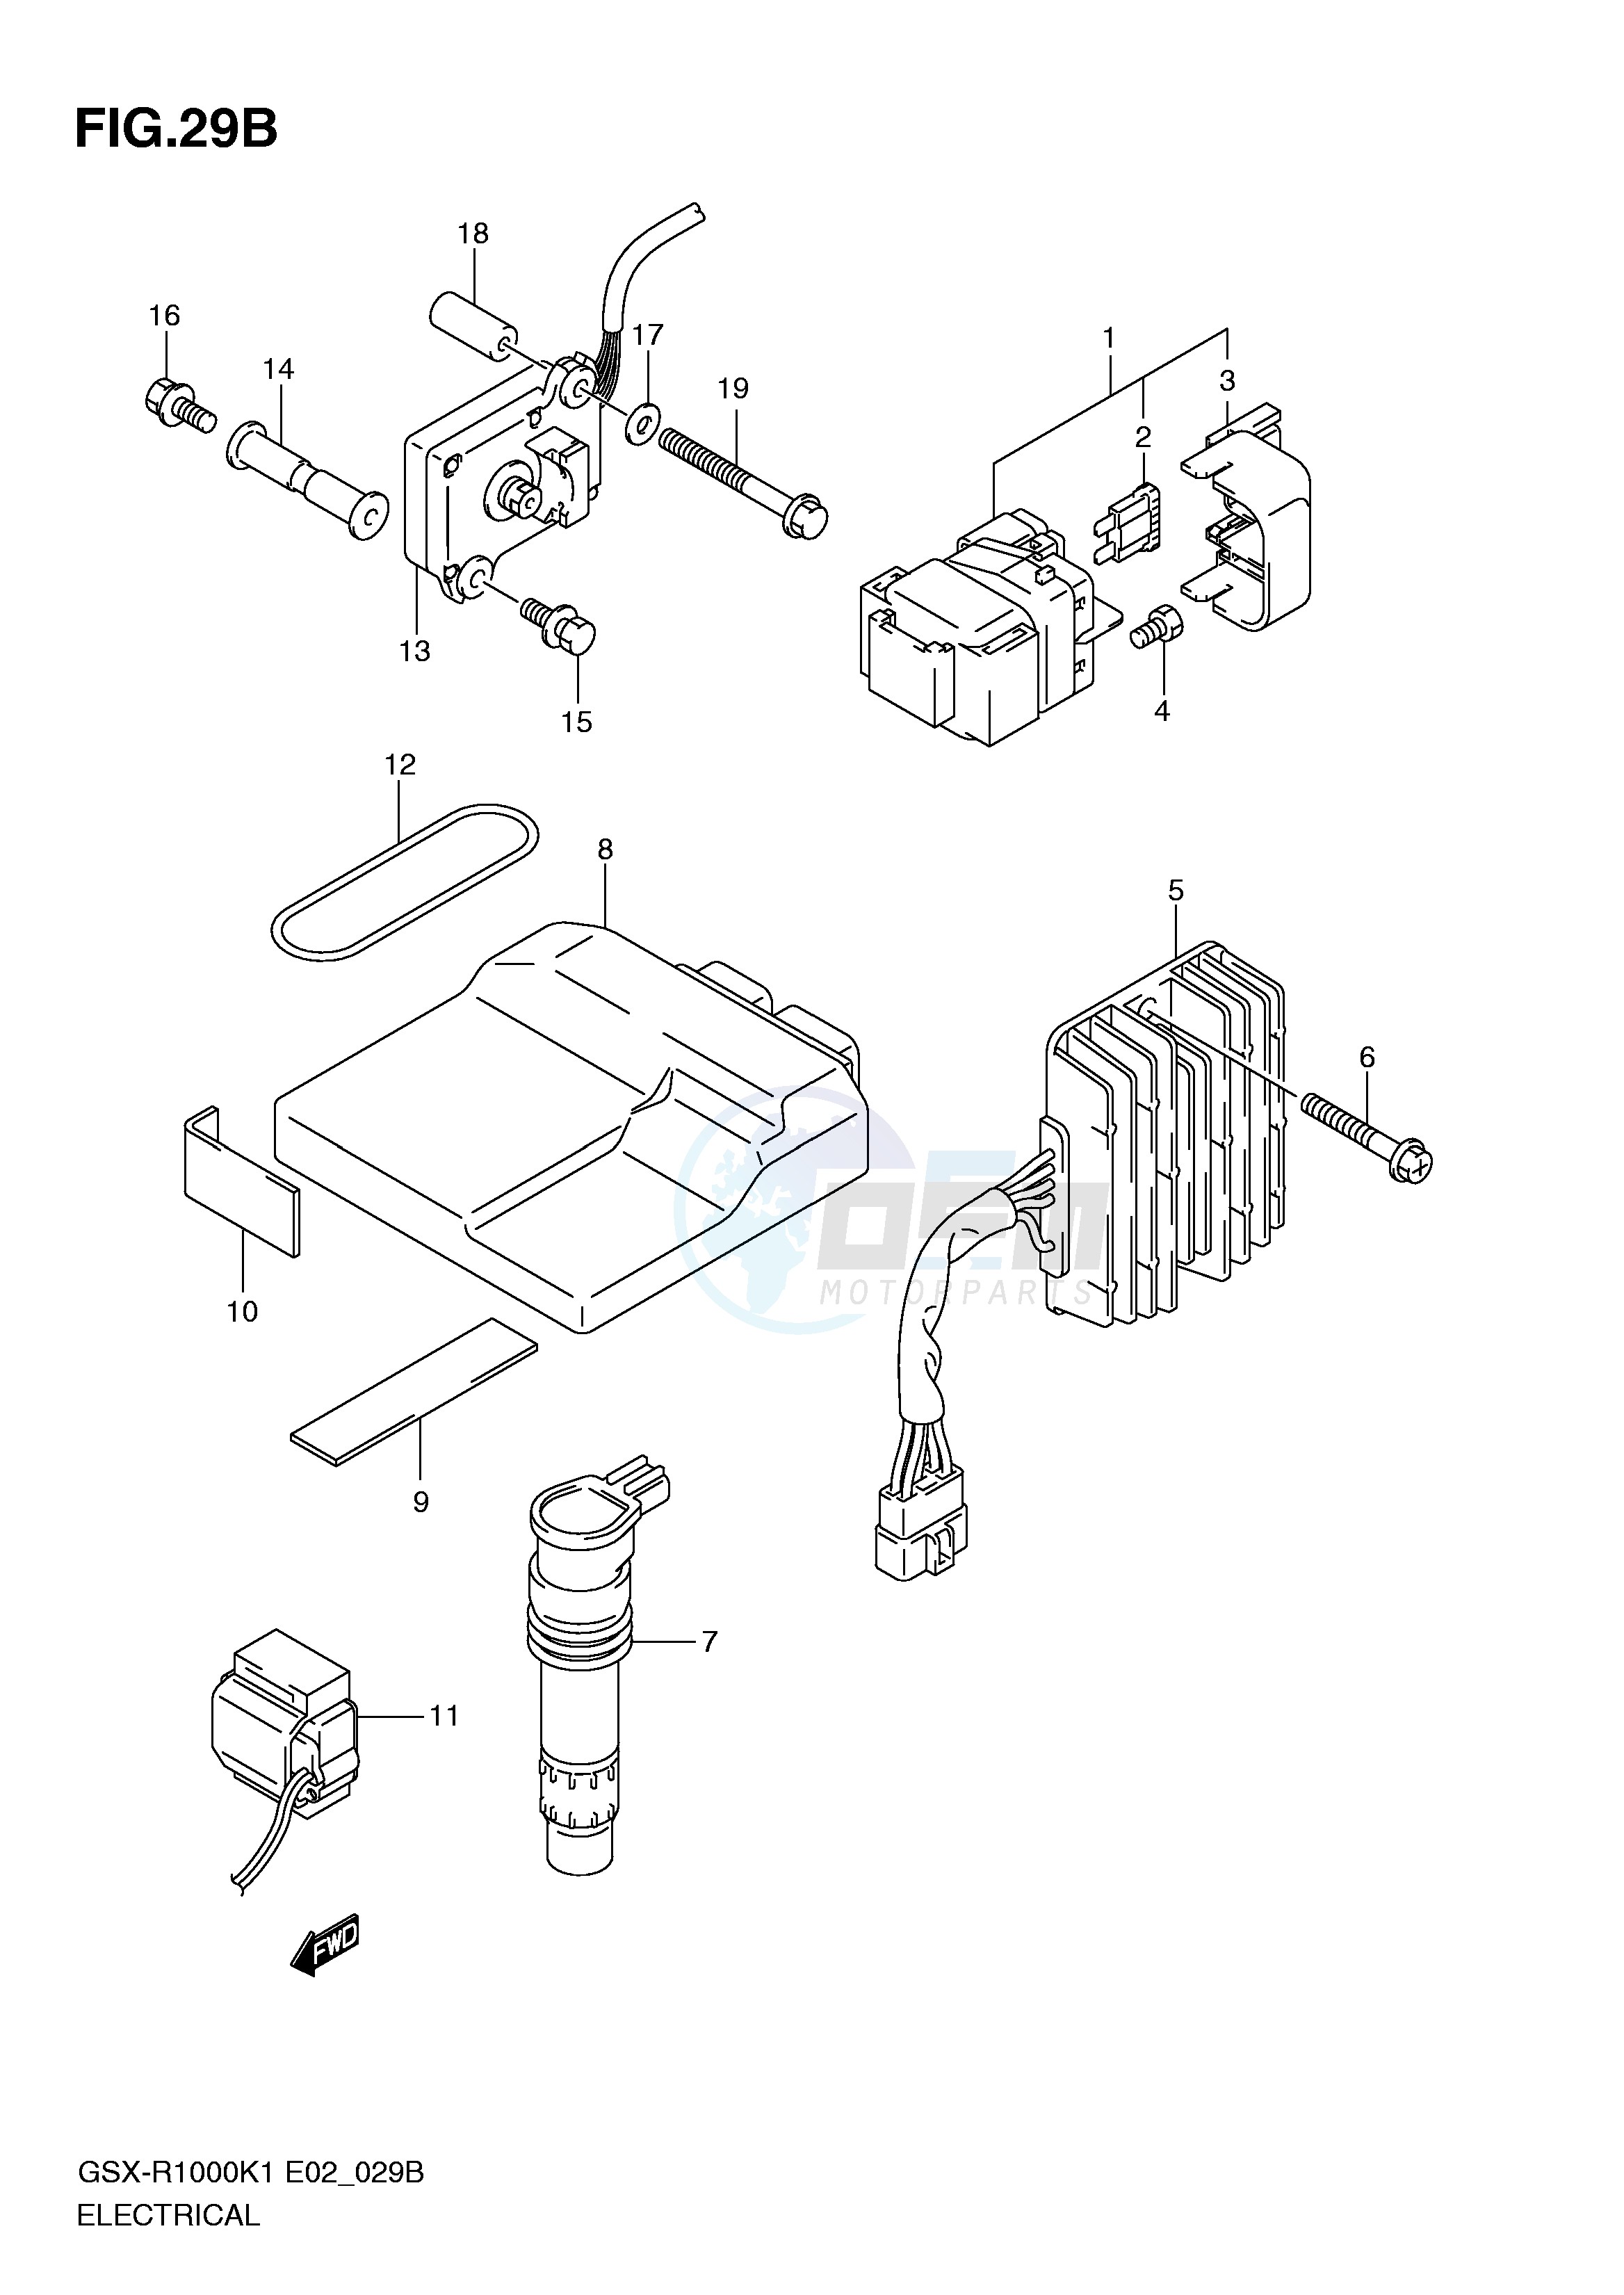 ELECTRICAL (GSX-R1000K1 E24) blueprint